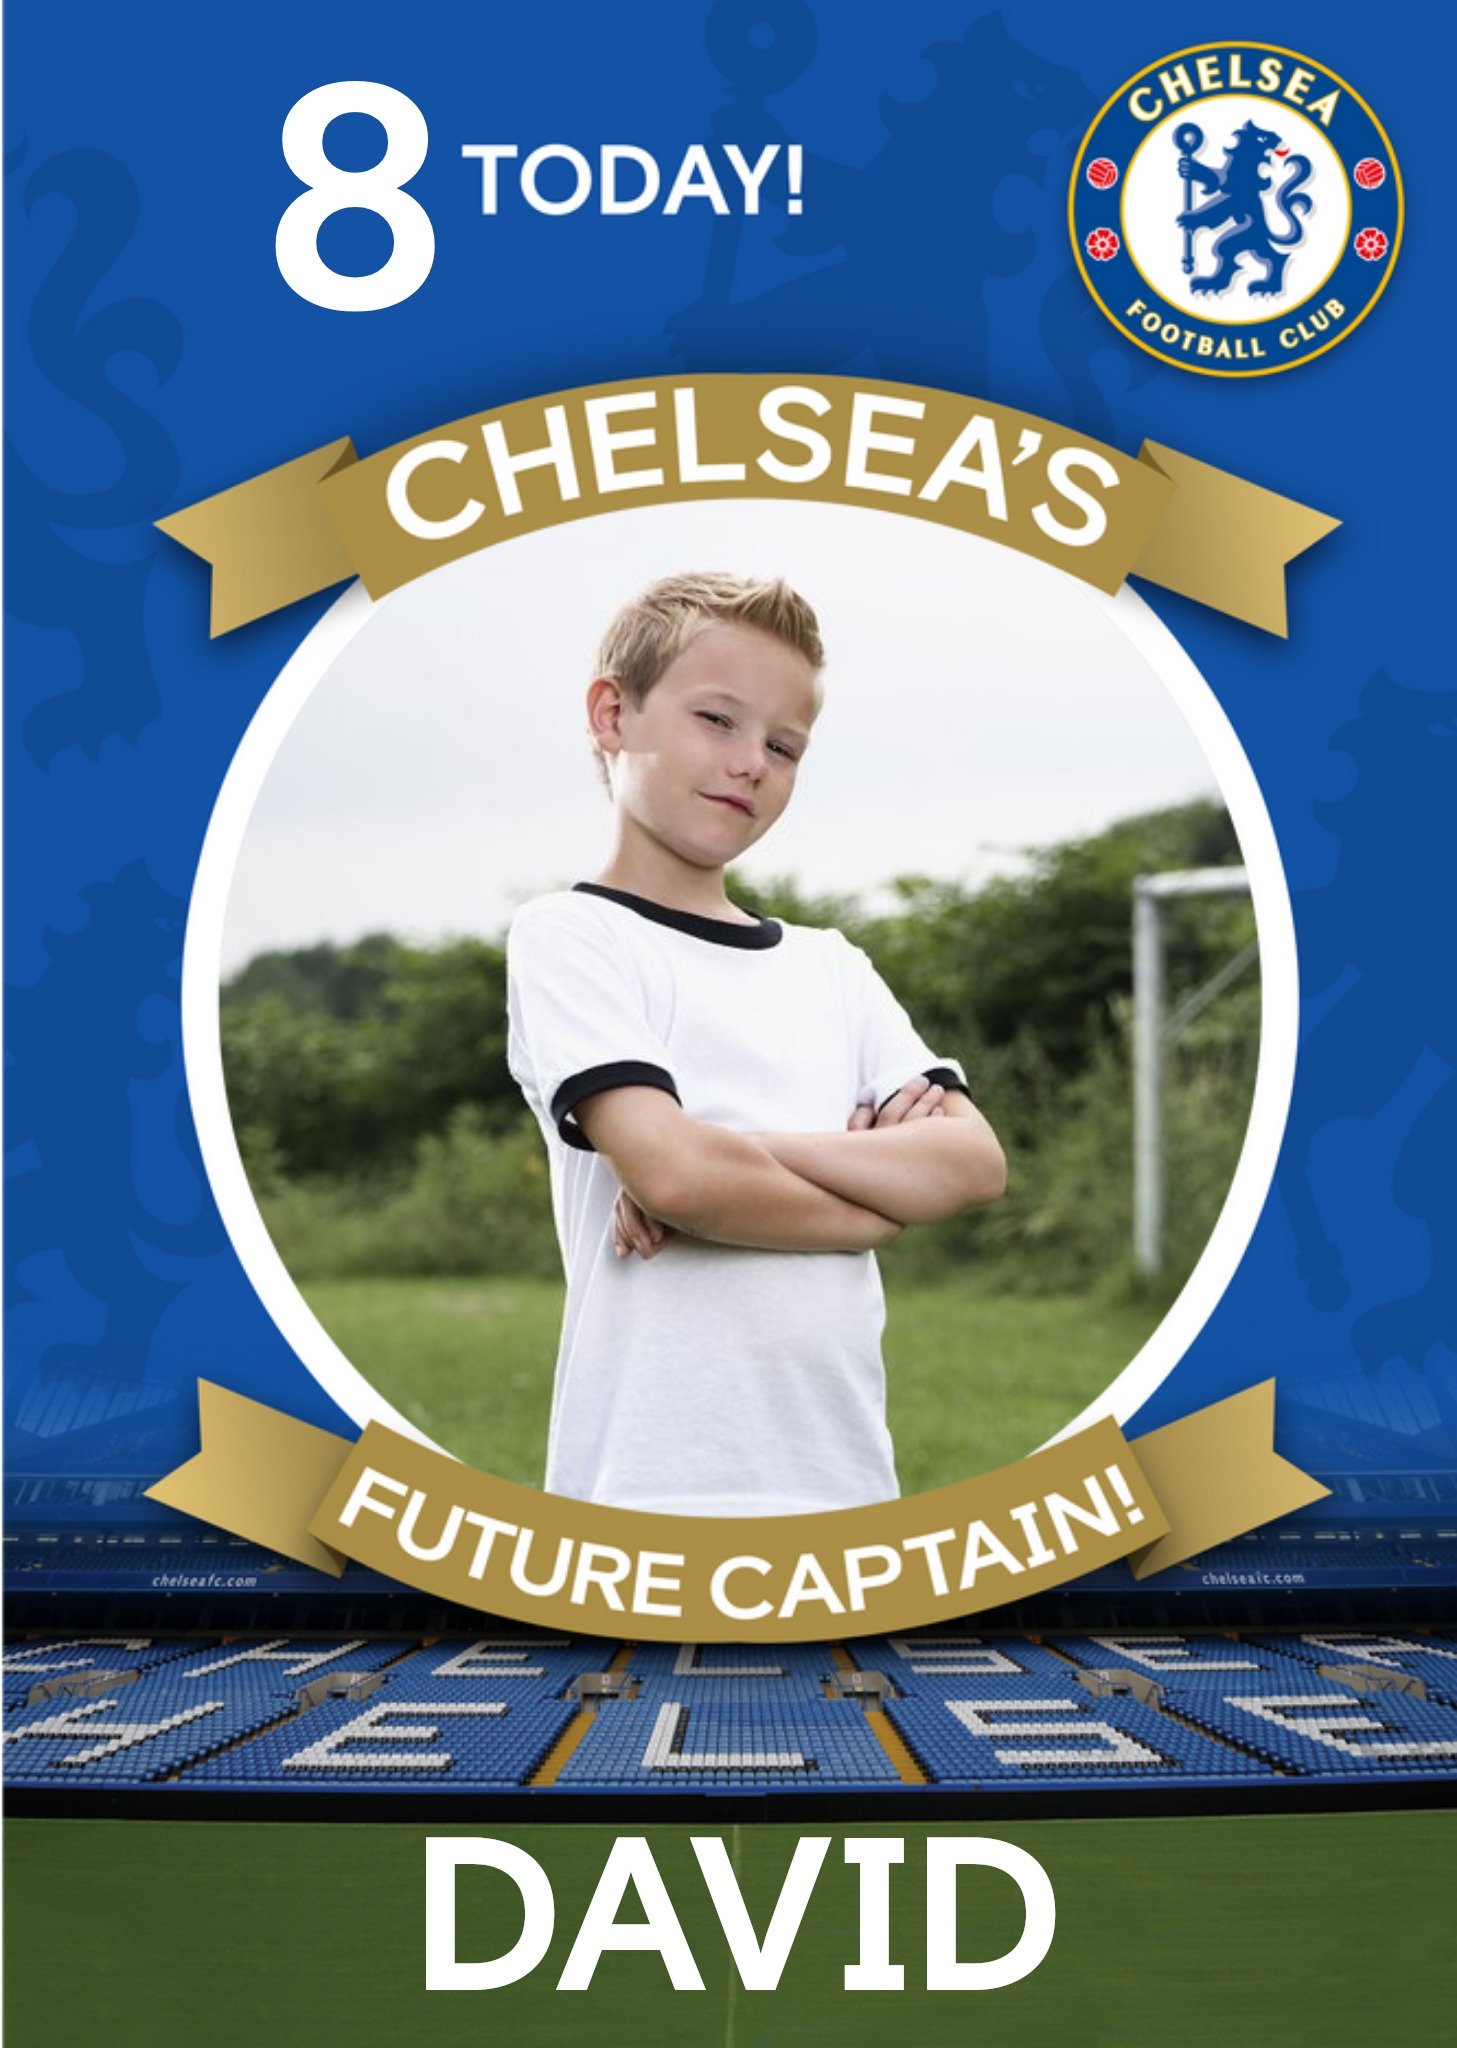 Chelsea Fc Birthday Card - Chelsea's Future Captain, Large